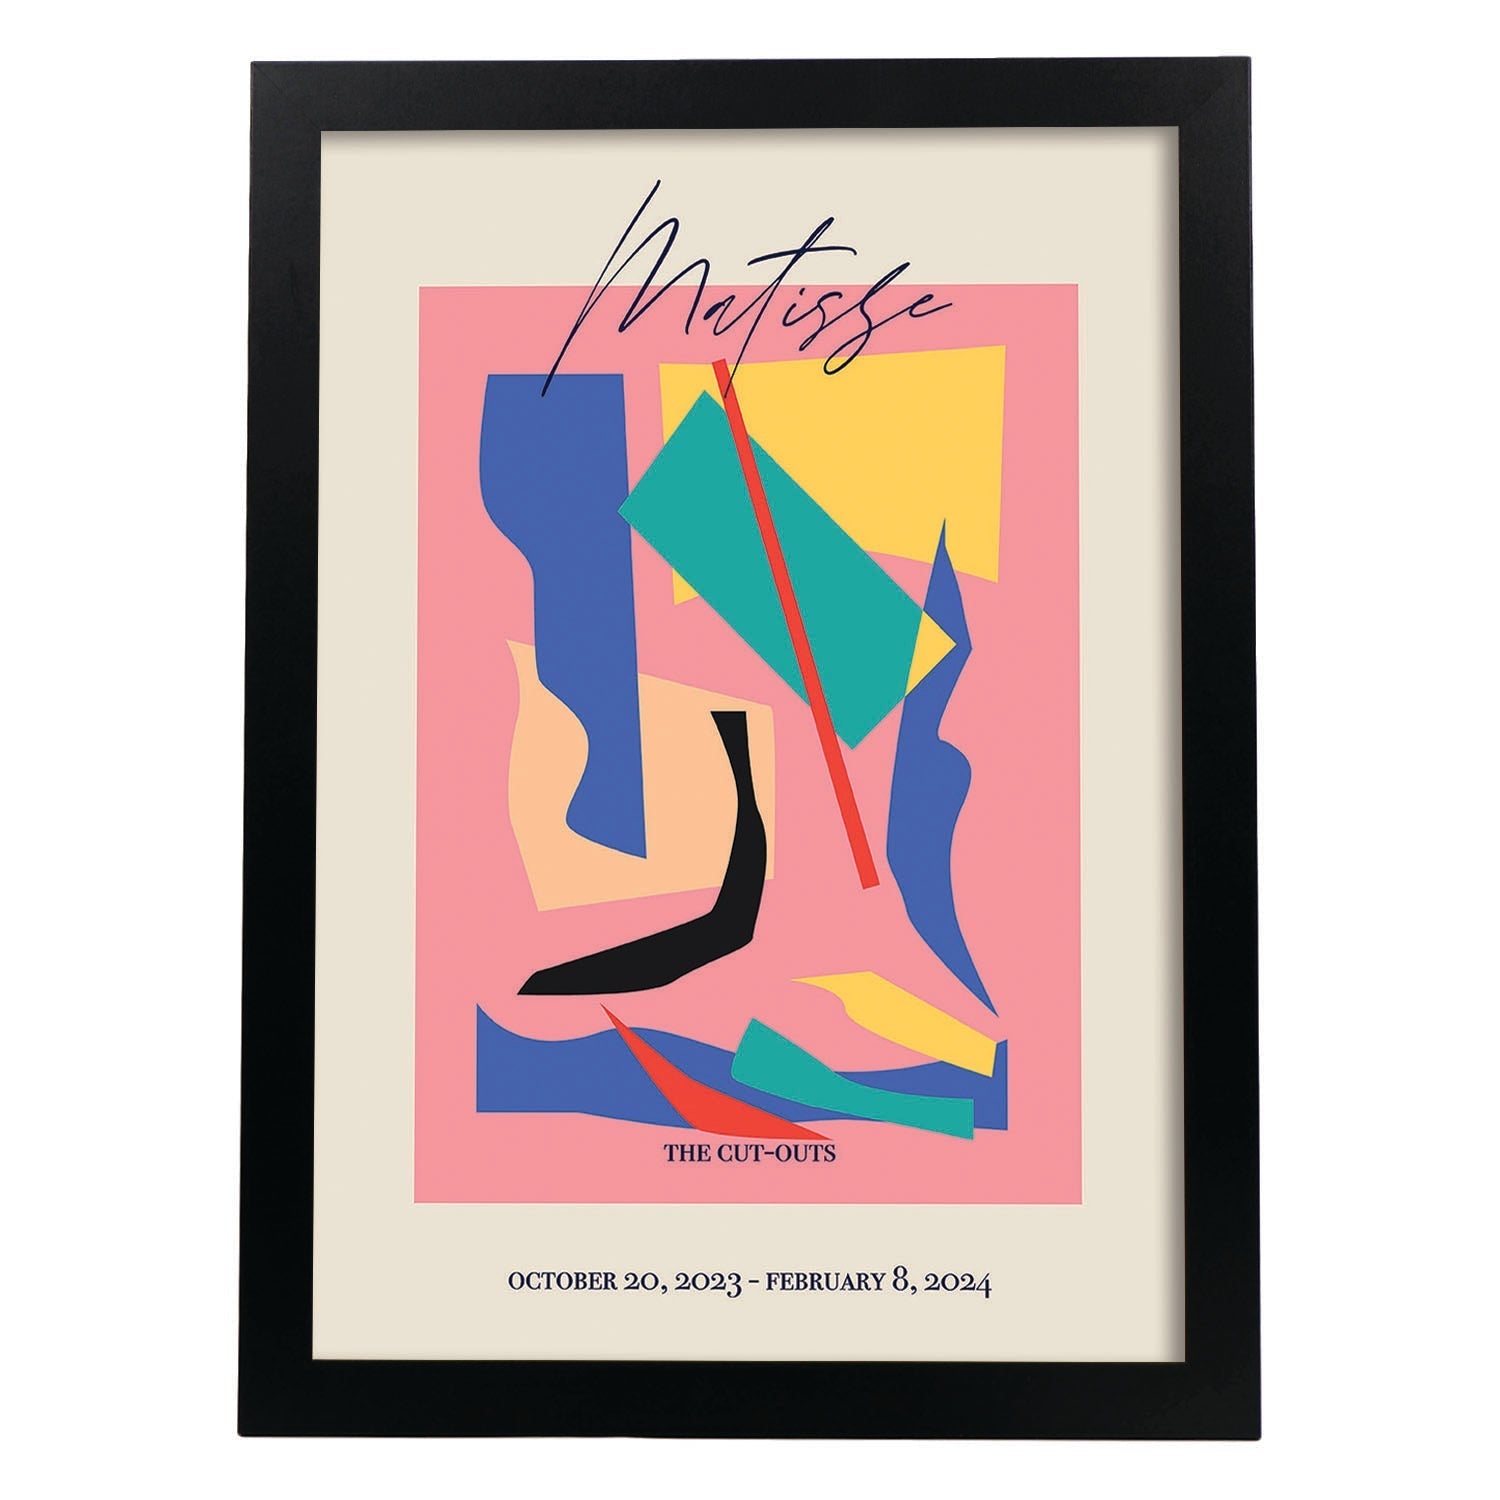 Lamina artistica decorativa con ilustración de Exposición Matisse 11 estilo fauvista-Artwork-Nacnic-A4-Marco Negro-Nacnic Estudio SL